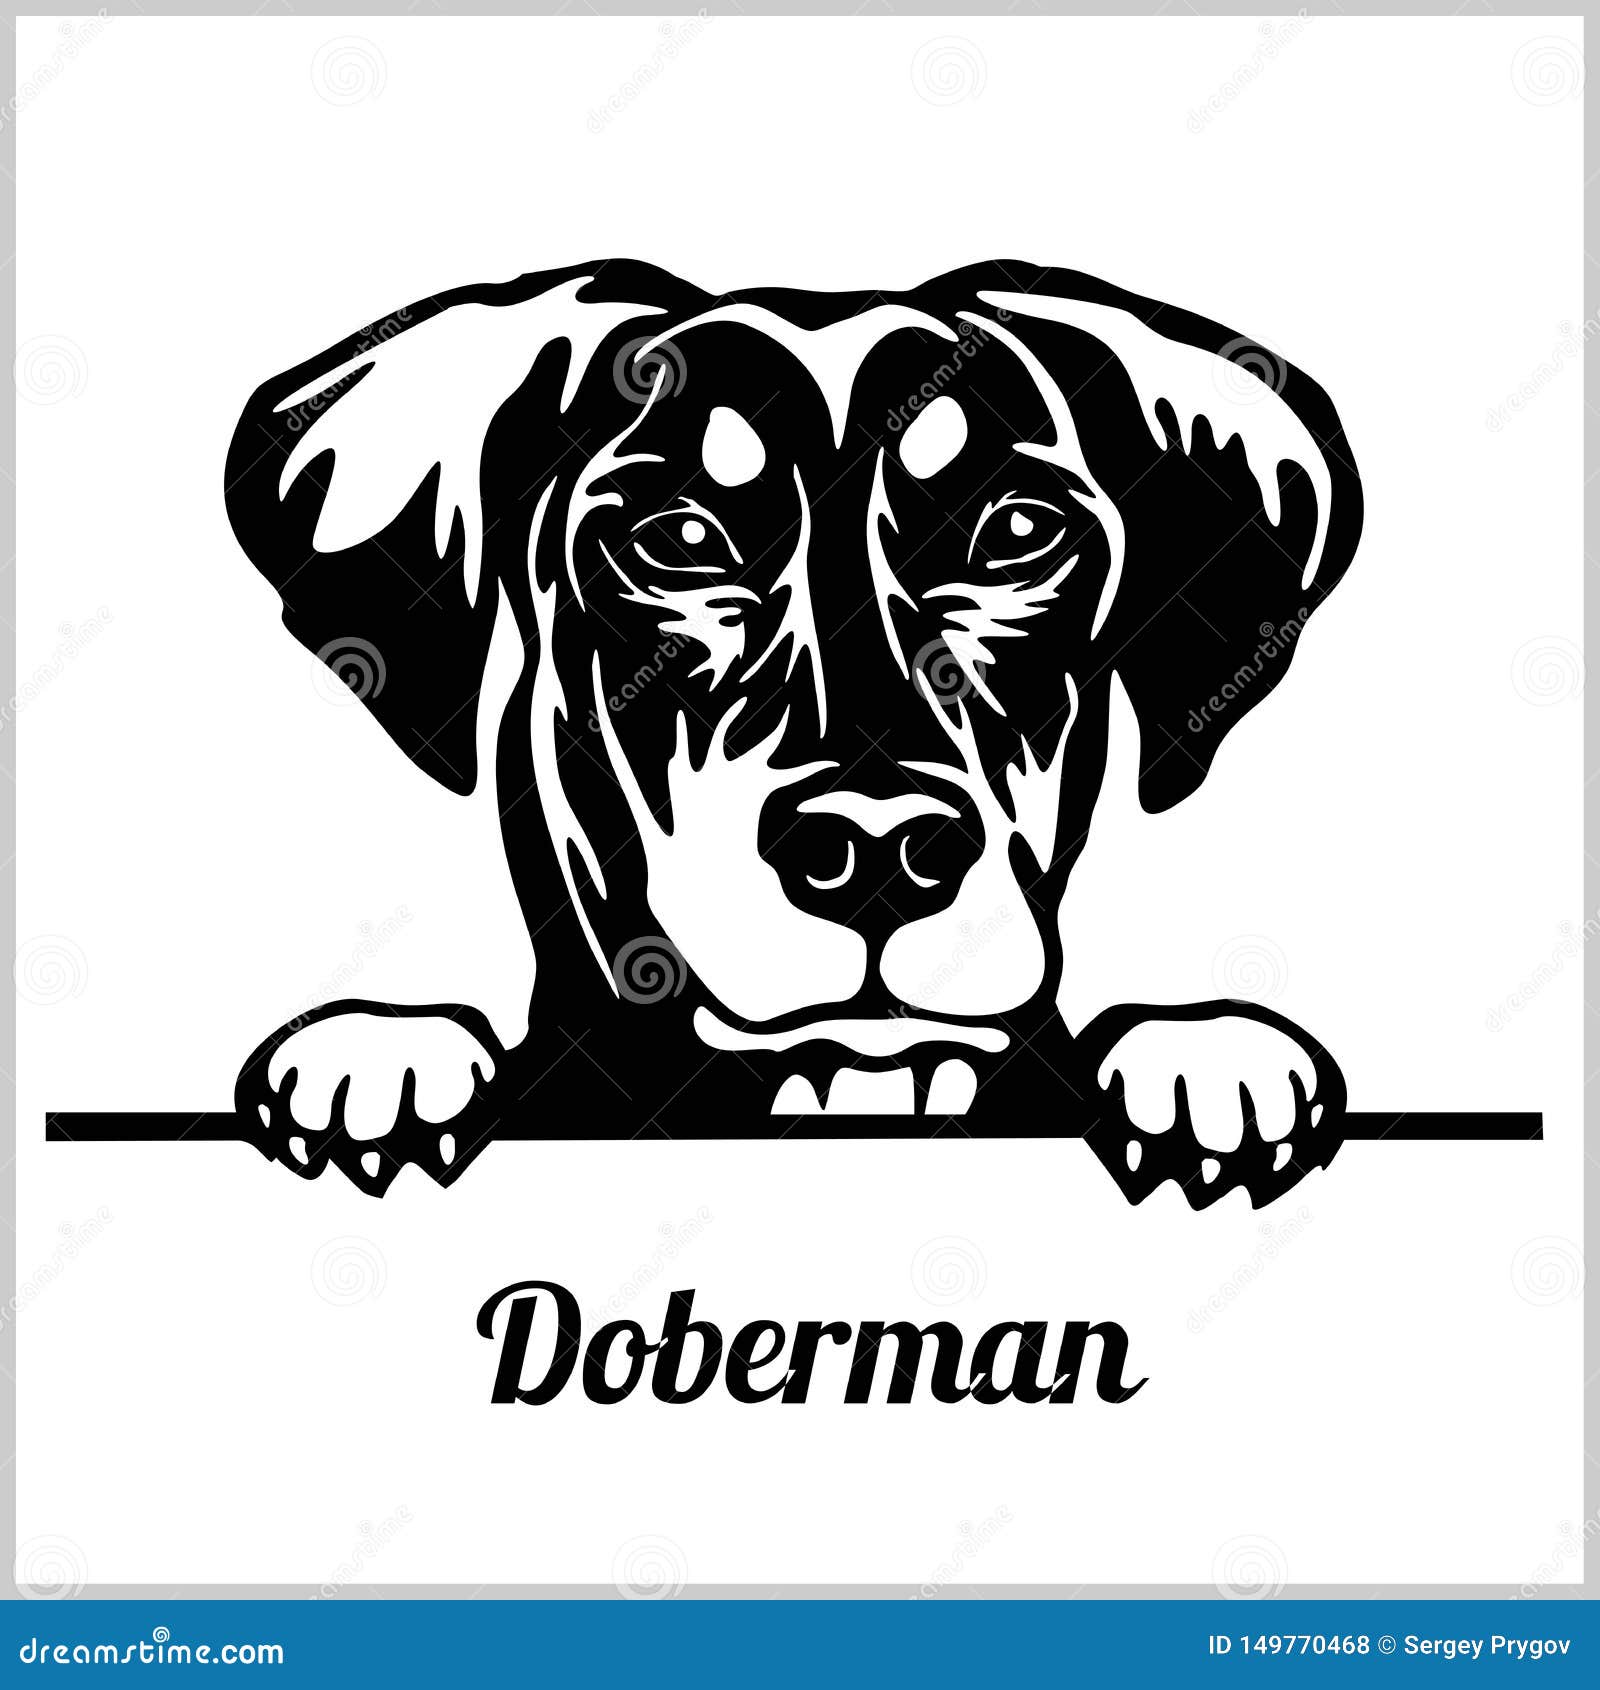 Doberman Peeking Dogs Breed Face Head Isolated On